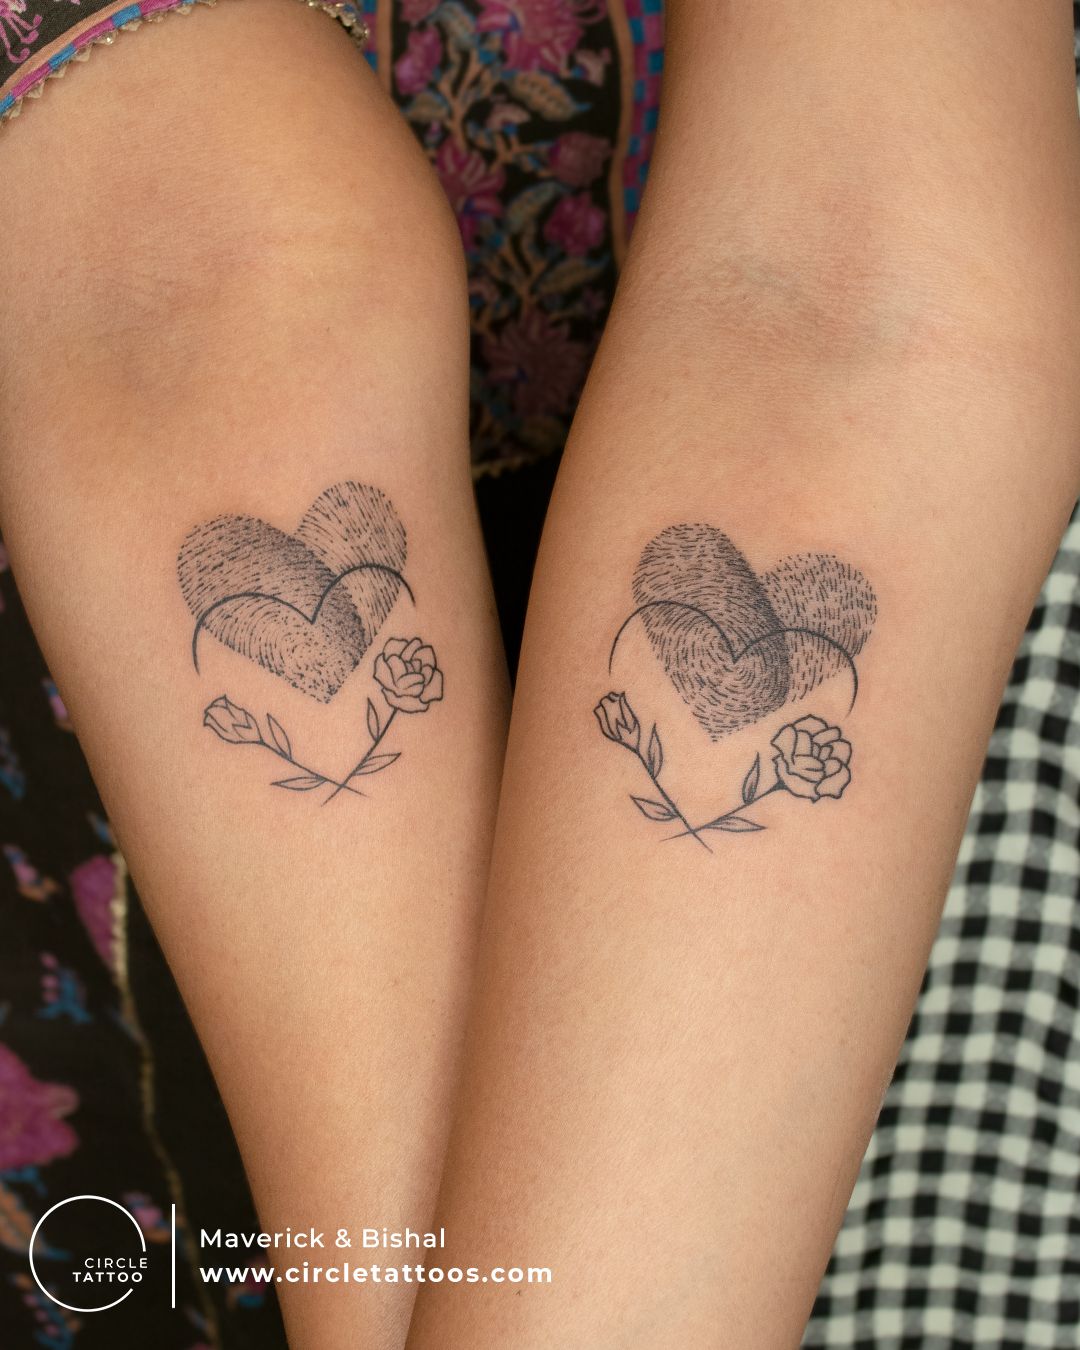 Tattoo uploaded by Circle Tattoo • Thumb Print Couple Tattoo done by Maverick Fernz and Bishal Majumder at Circle Tattoo India • Tattoodo